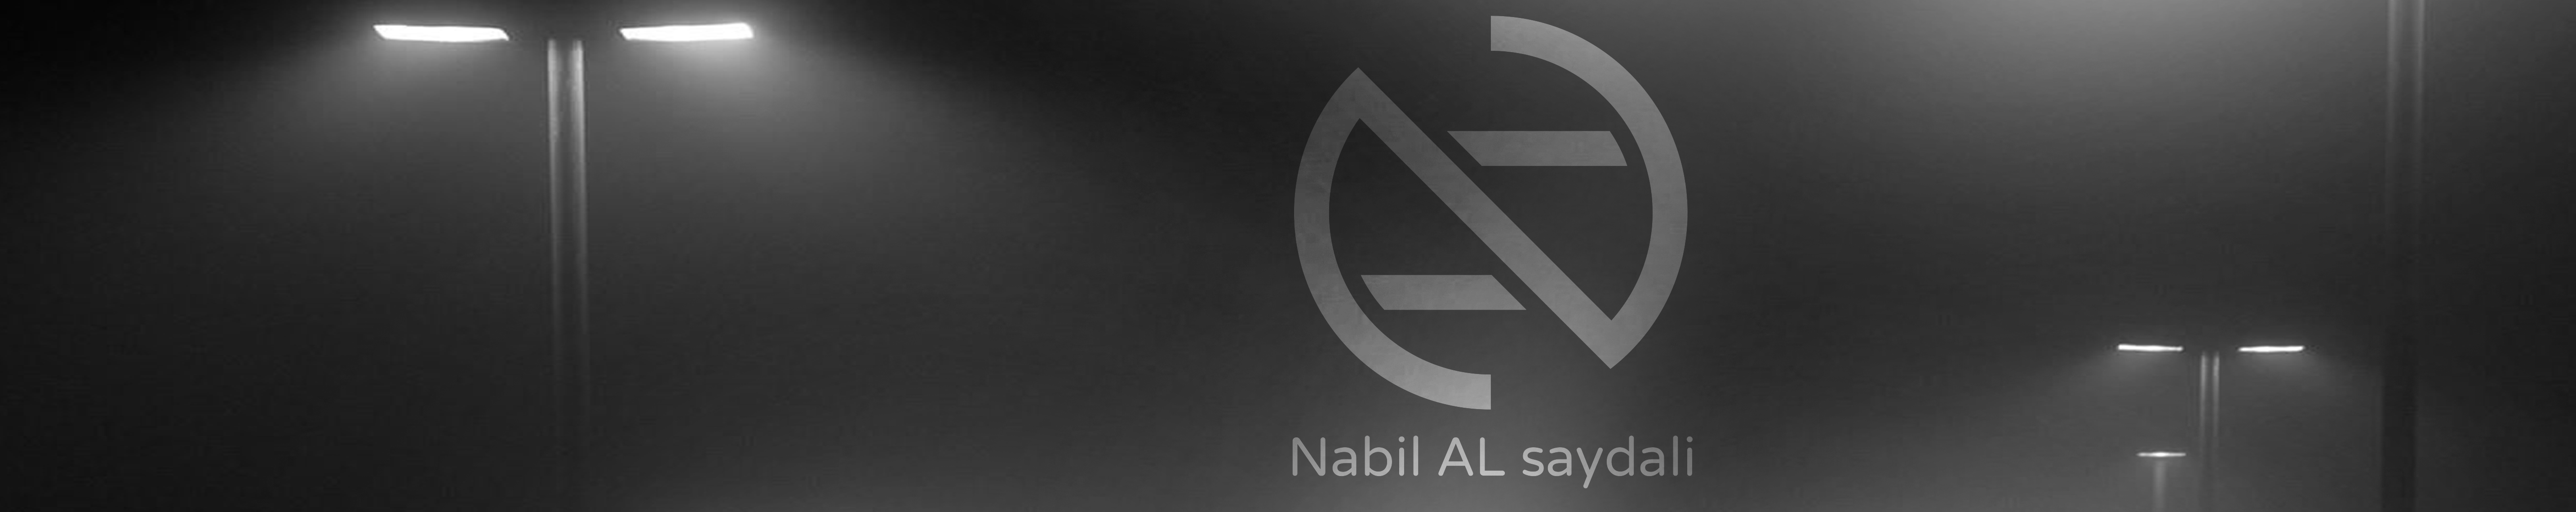 Bannière de profil de Nabil Al Saydali